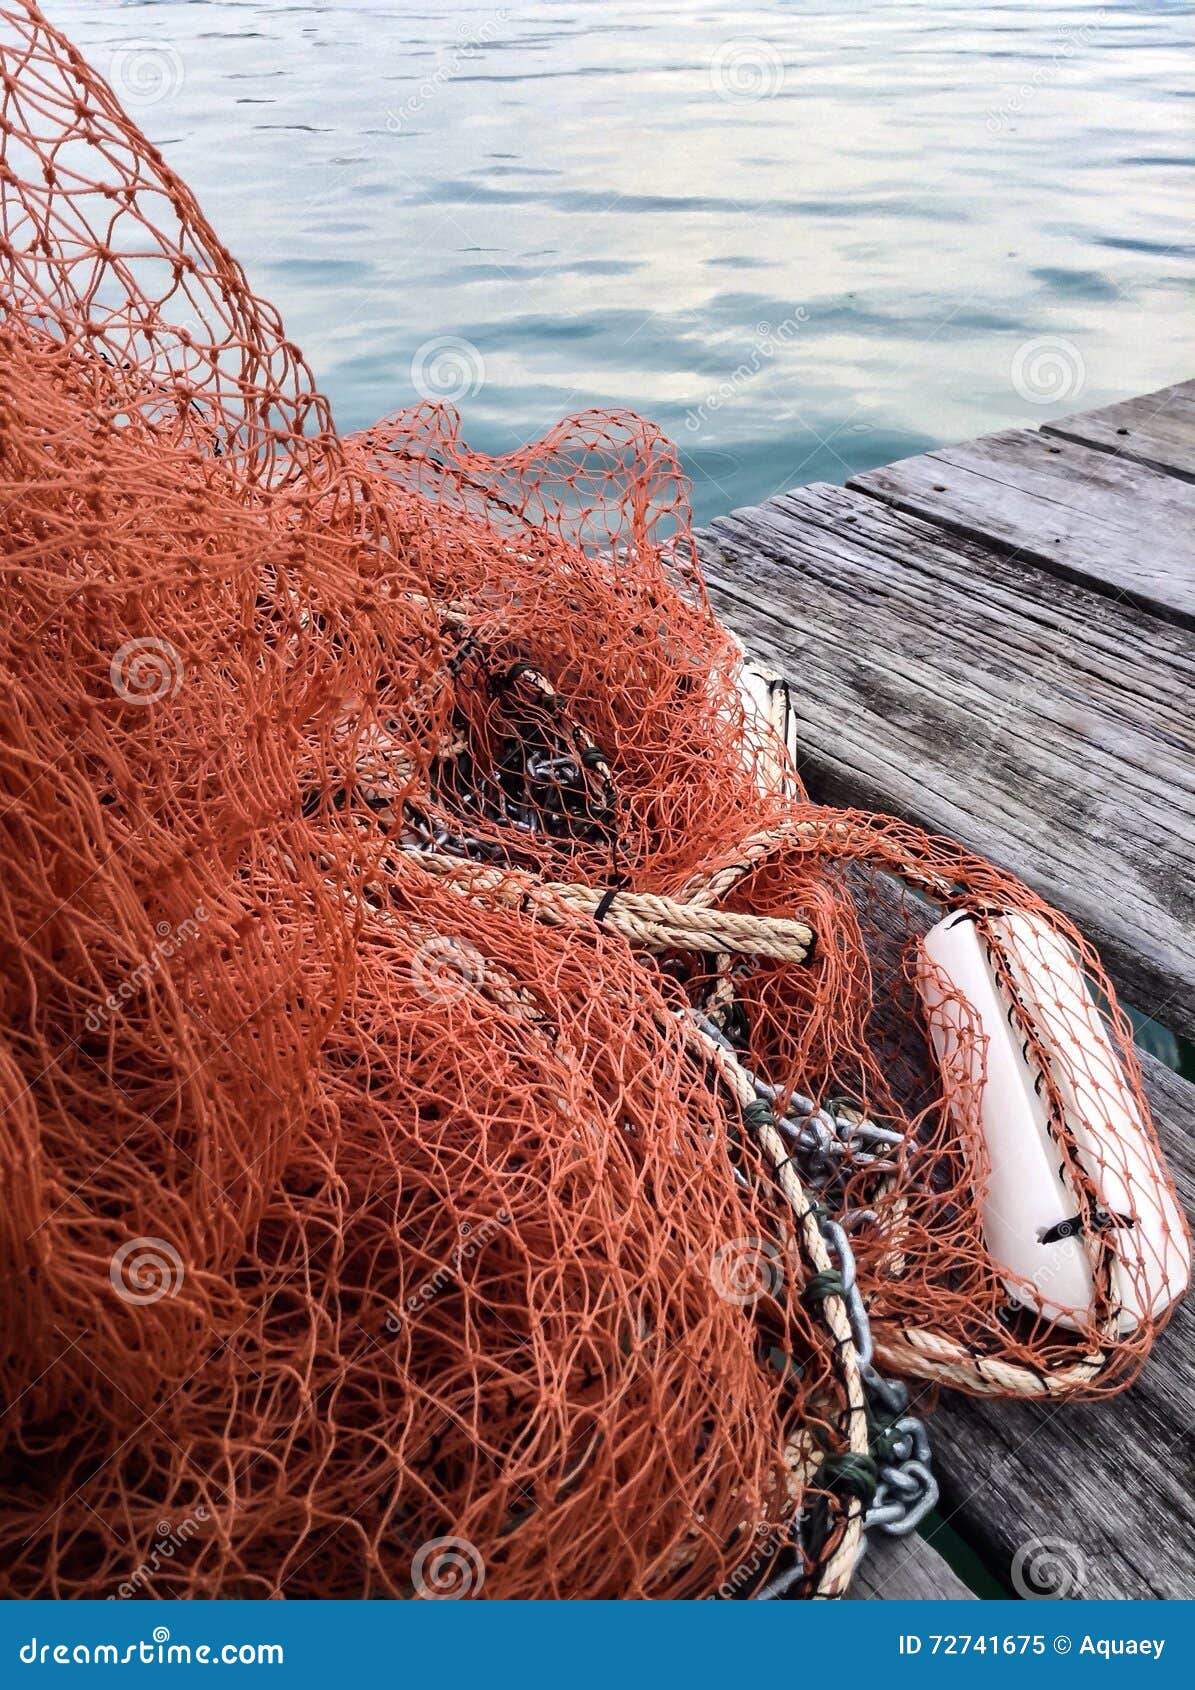 Fishnet view stock image. Image of rope, fisherman, mesh - 72741675